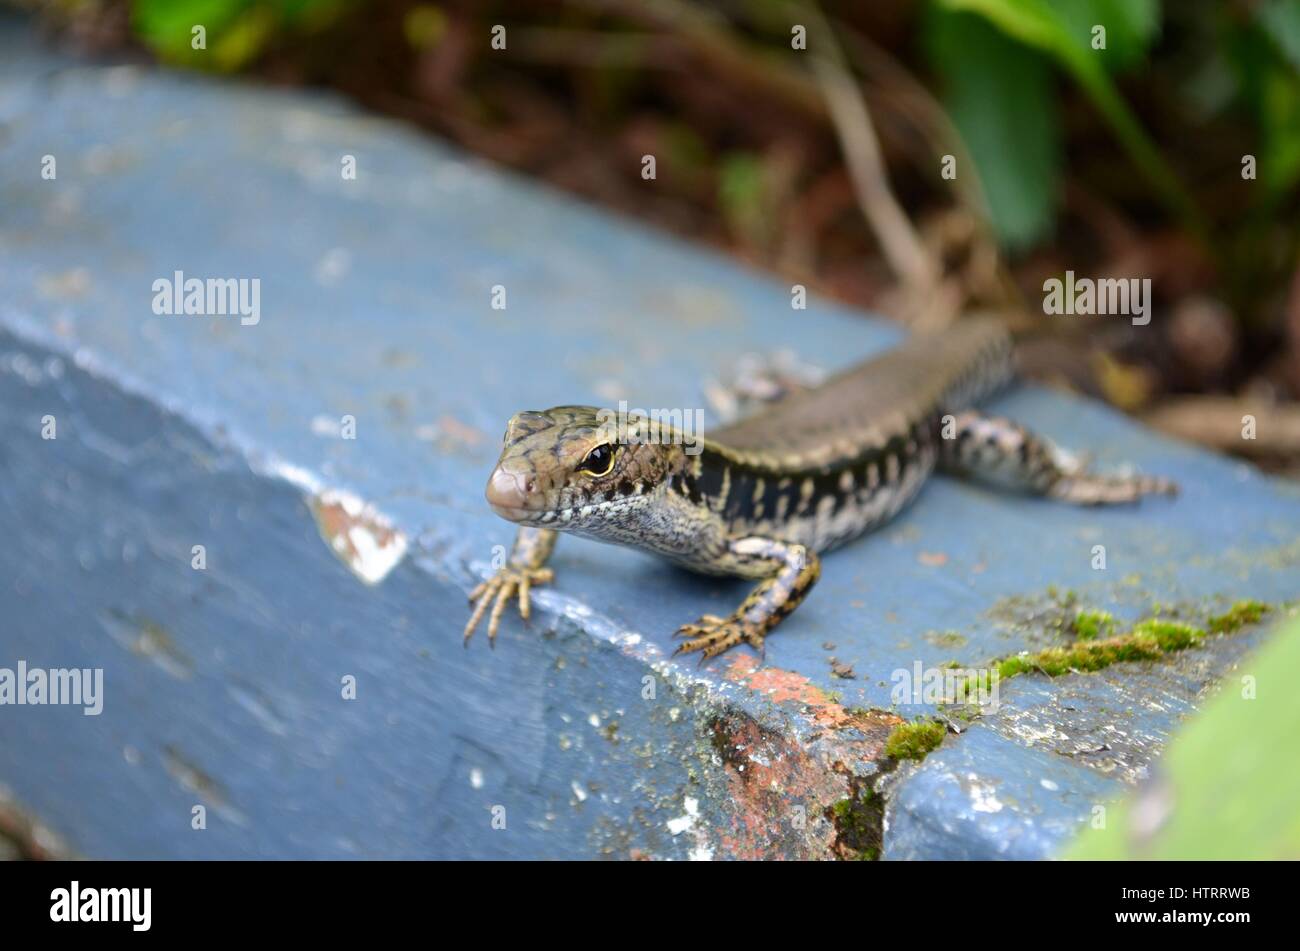 Common Garden Skink Lizard Zoom In Close Up Stock Photo 135747959